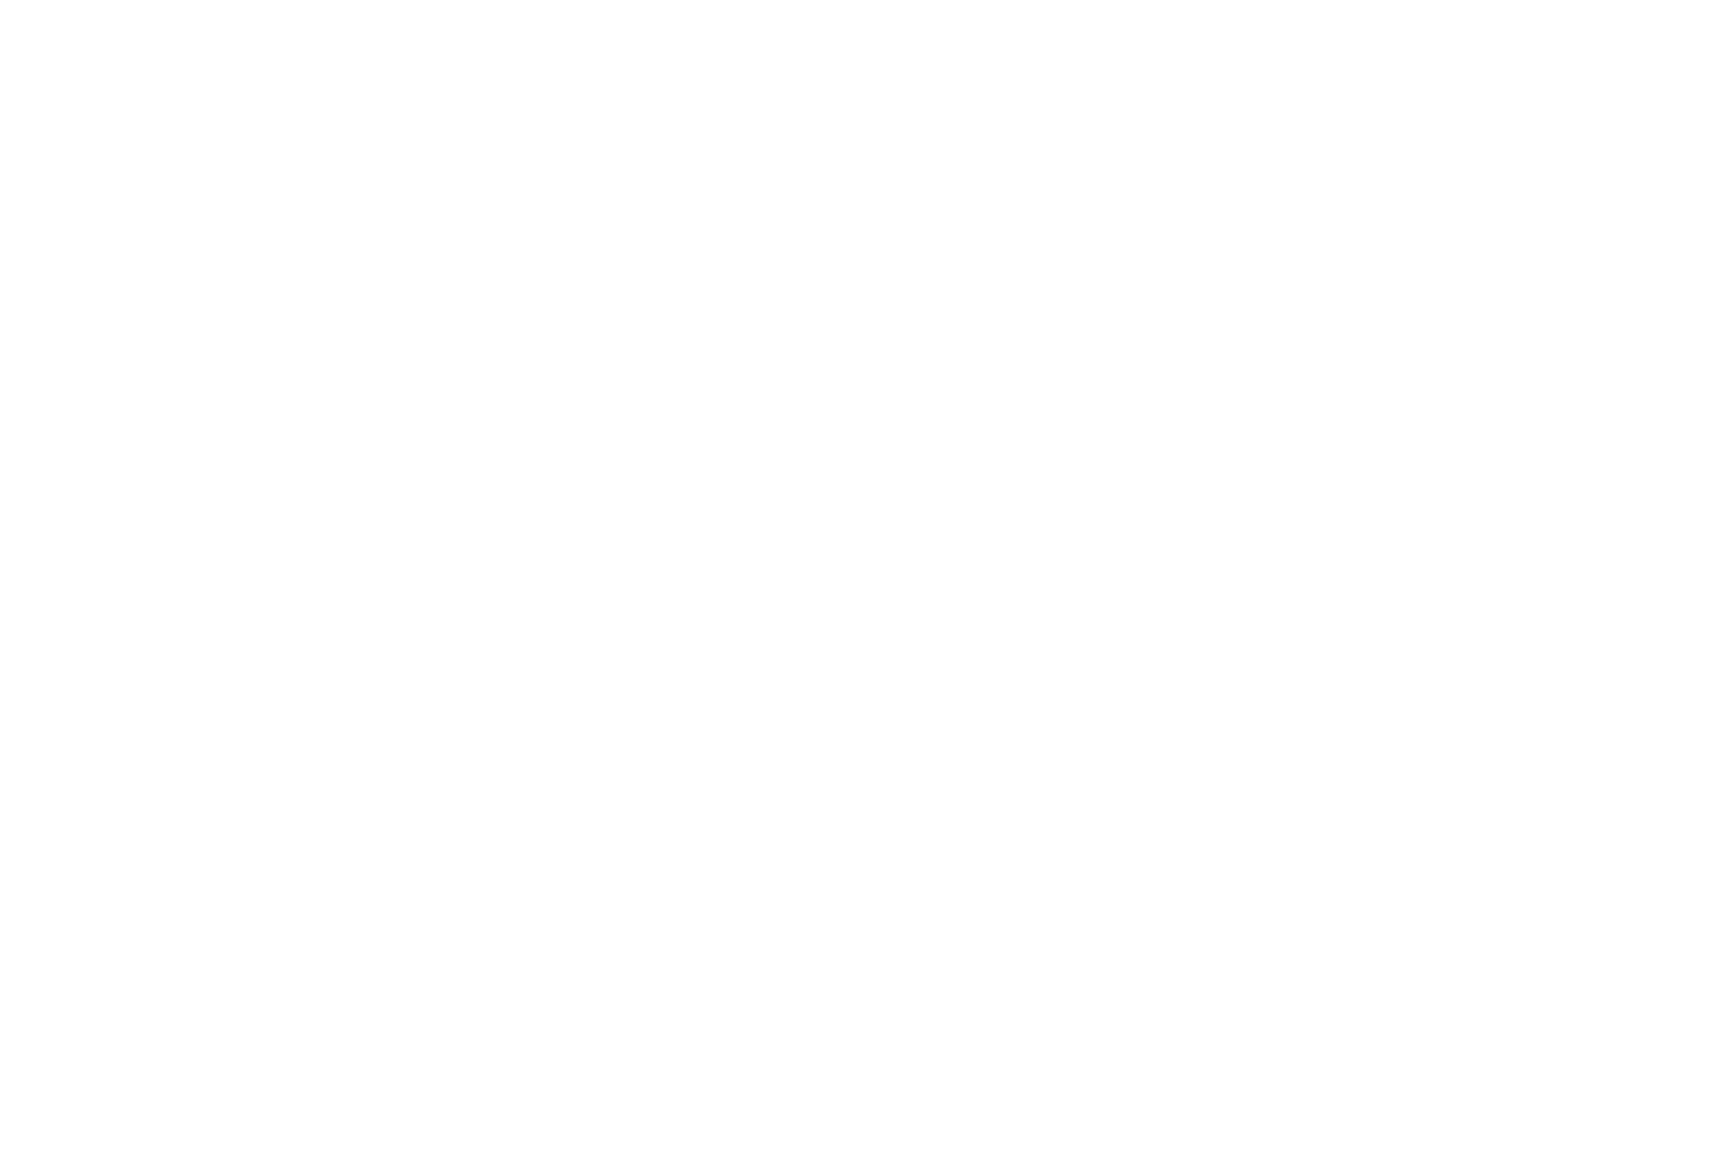 Yachtech Army Footer, Yacht Work List